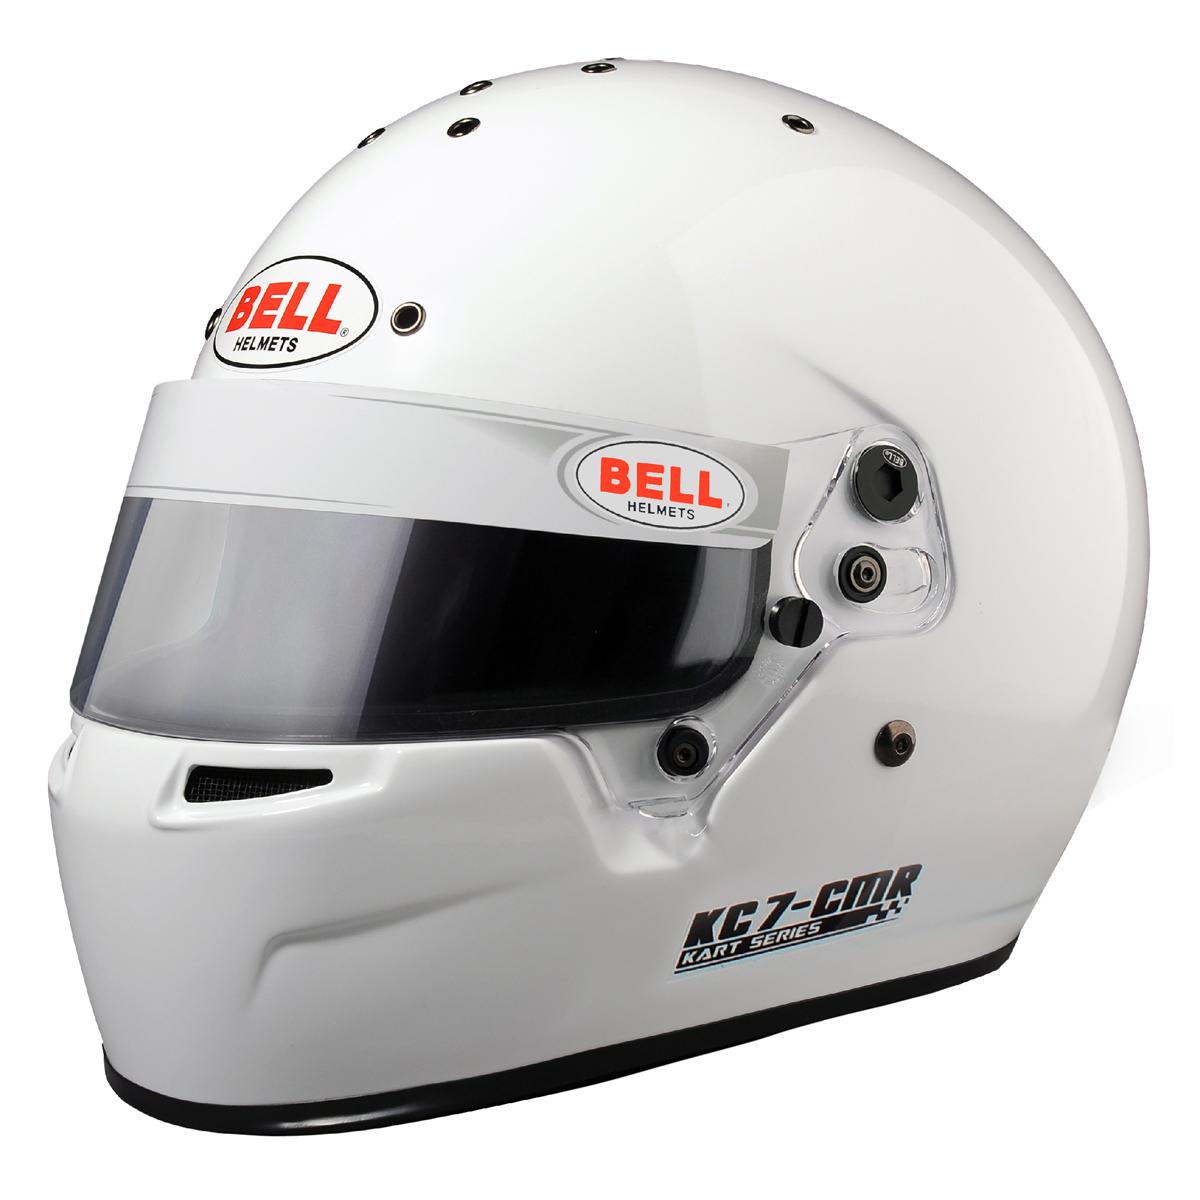 BELL RACING ヘルメット KC7 CMR グリーン-silversky-lifesciences.com